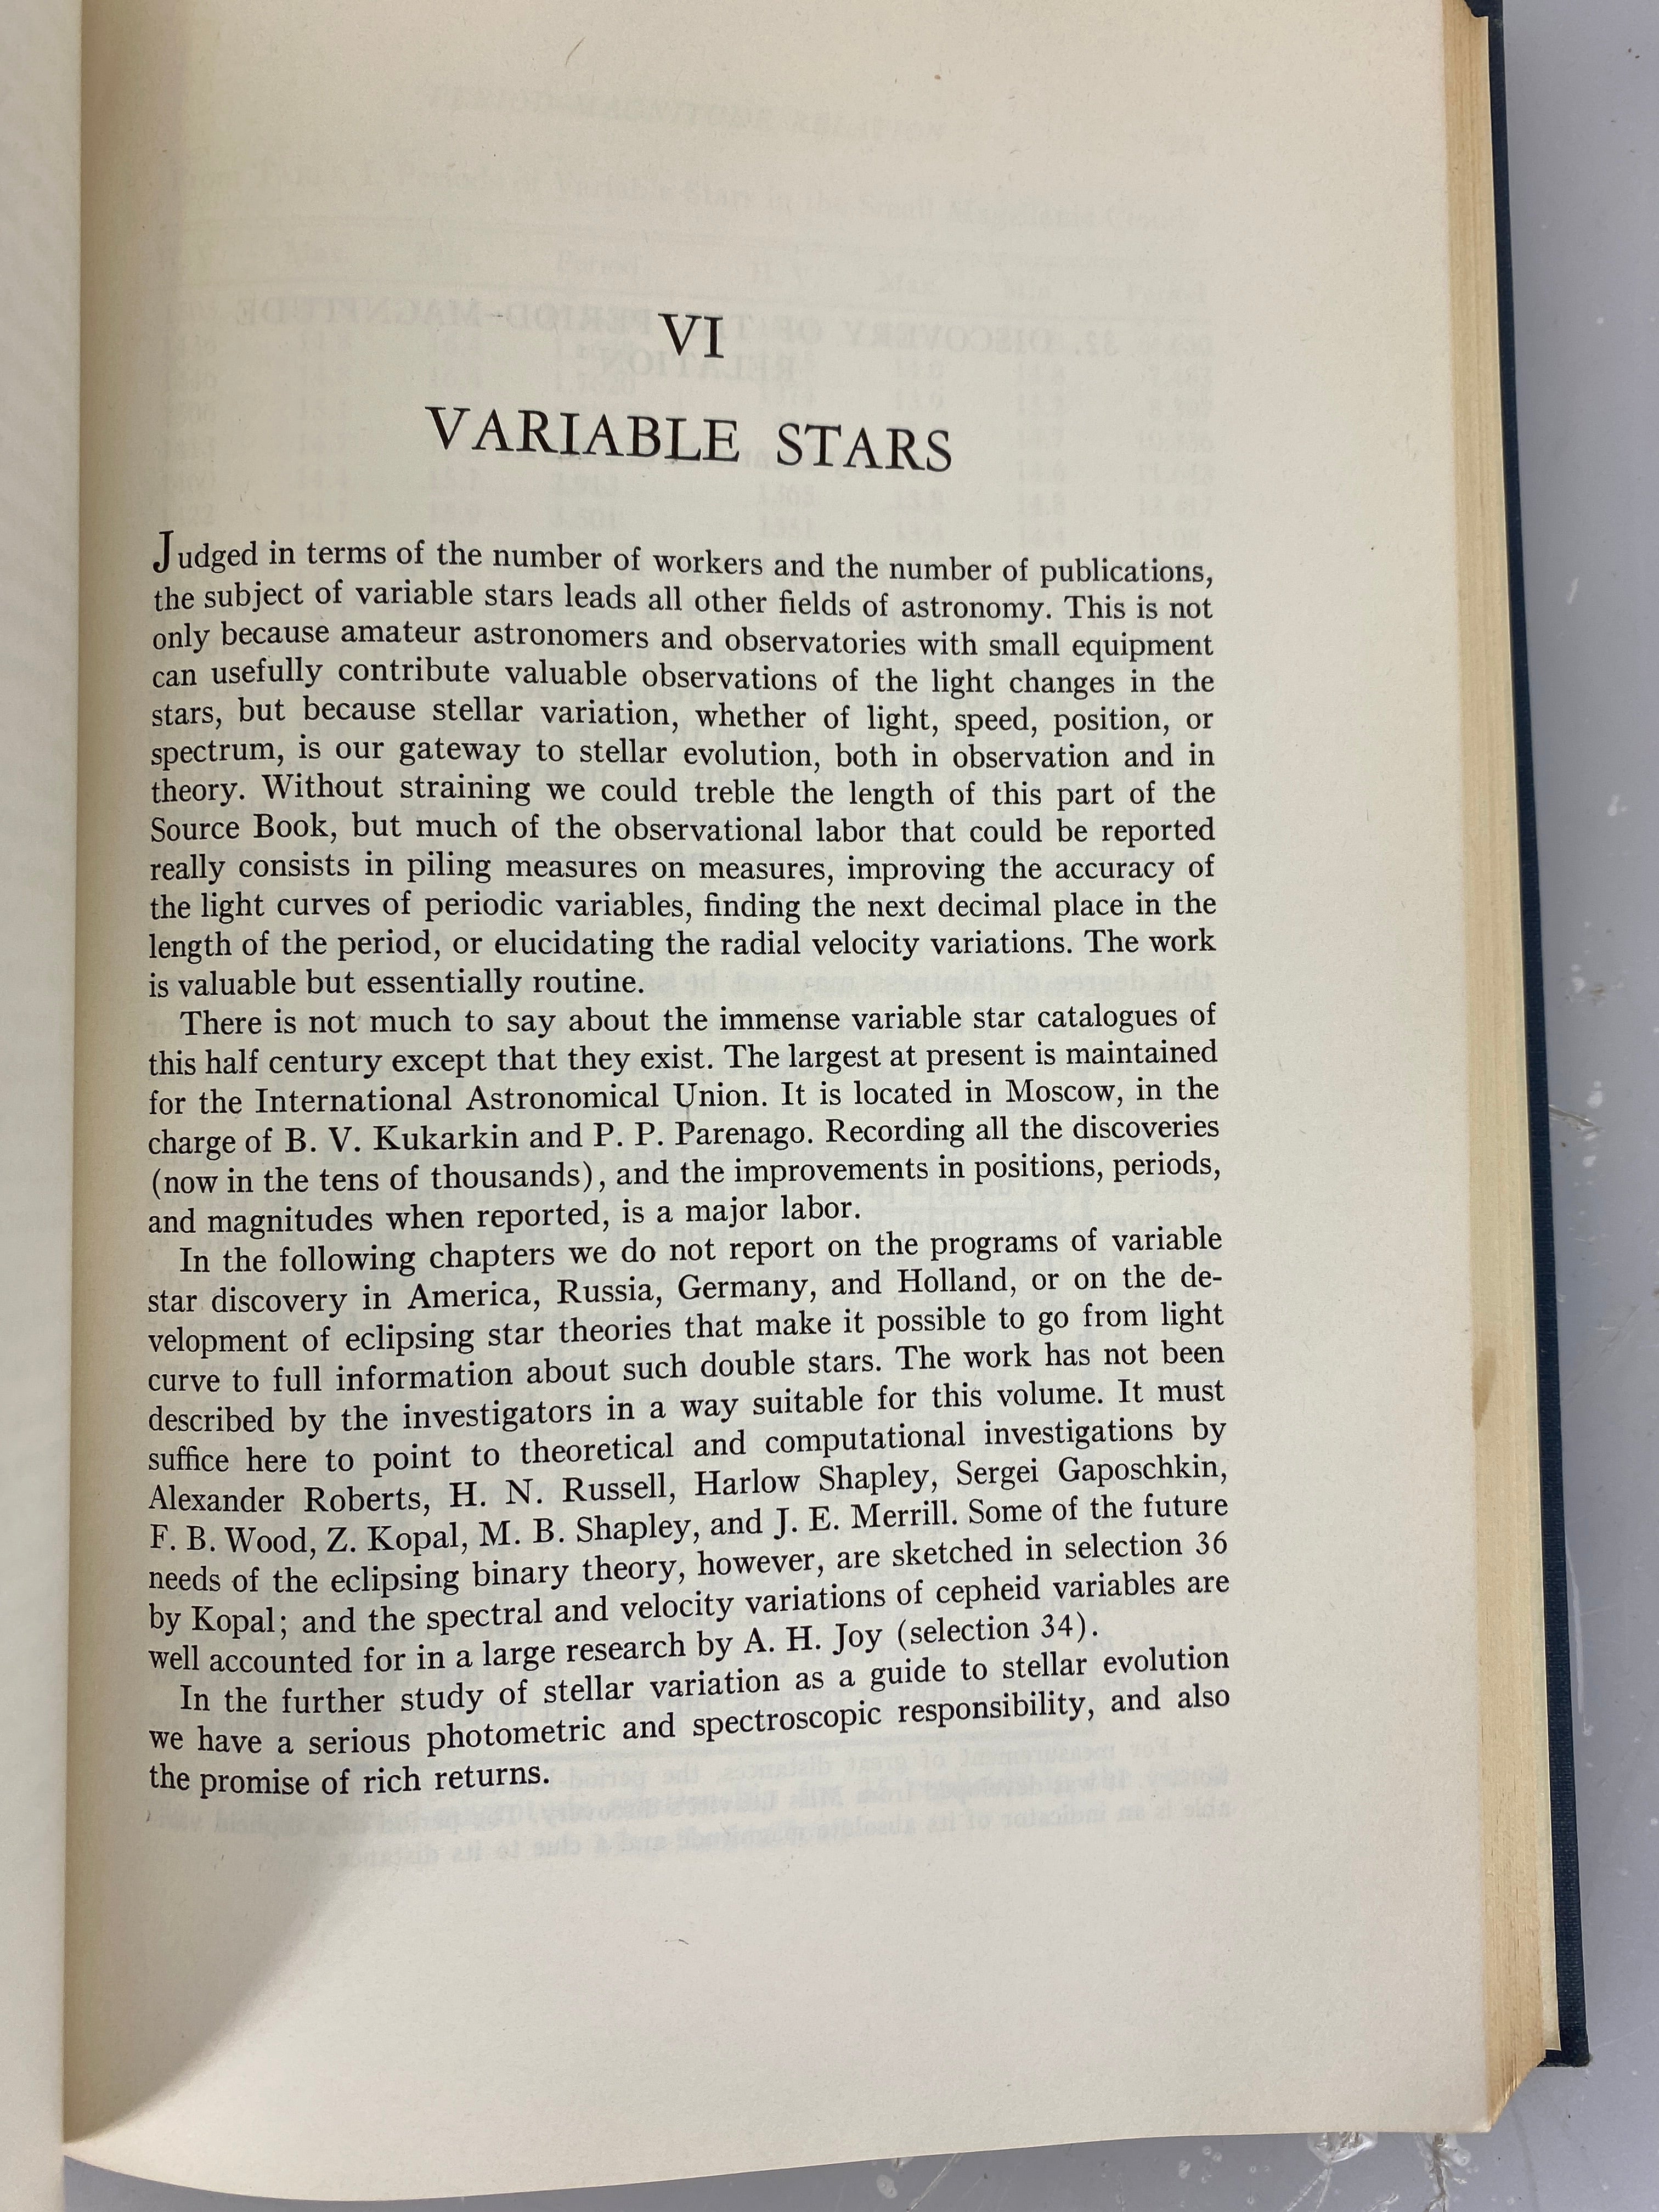 Source Book in Astronomy 1900-1950 by Harlow Shapley Harvard University Press 1960 HC DJ